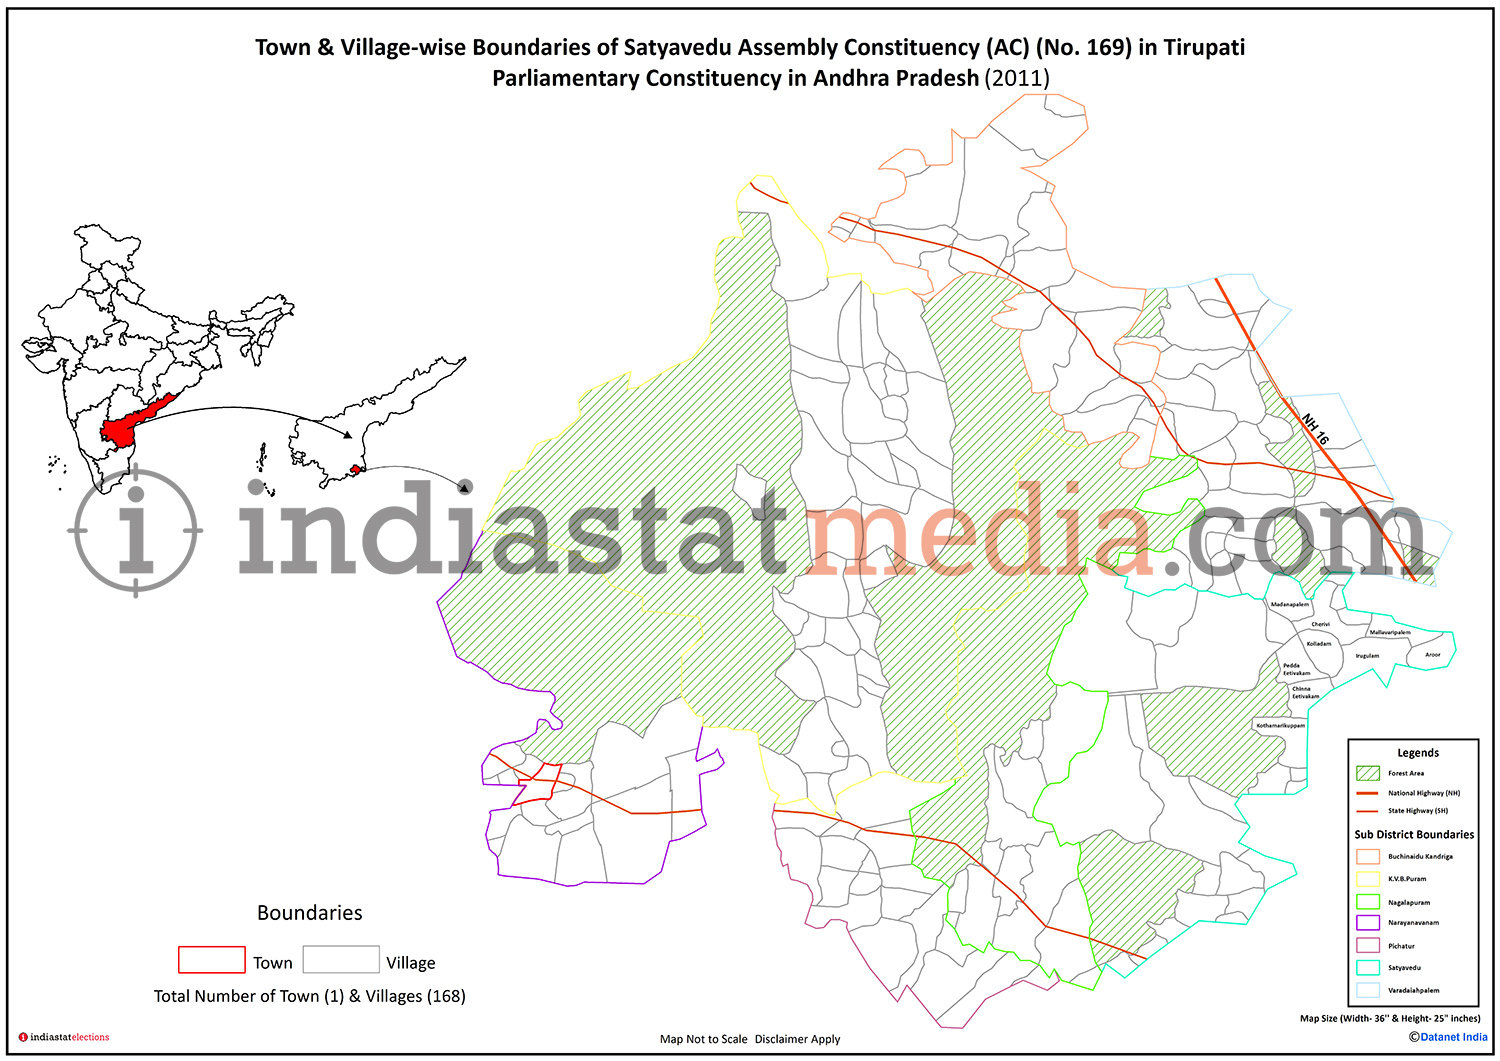 town and village-wise boundaries of satyavedu assembly constituency in Tirupati Andhra pradesh